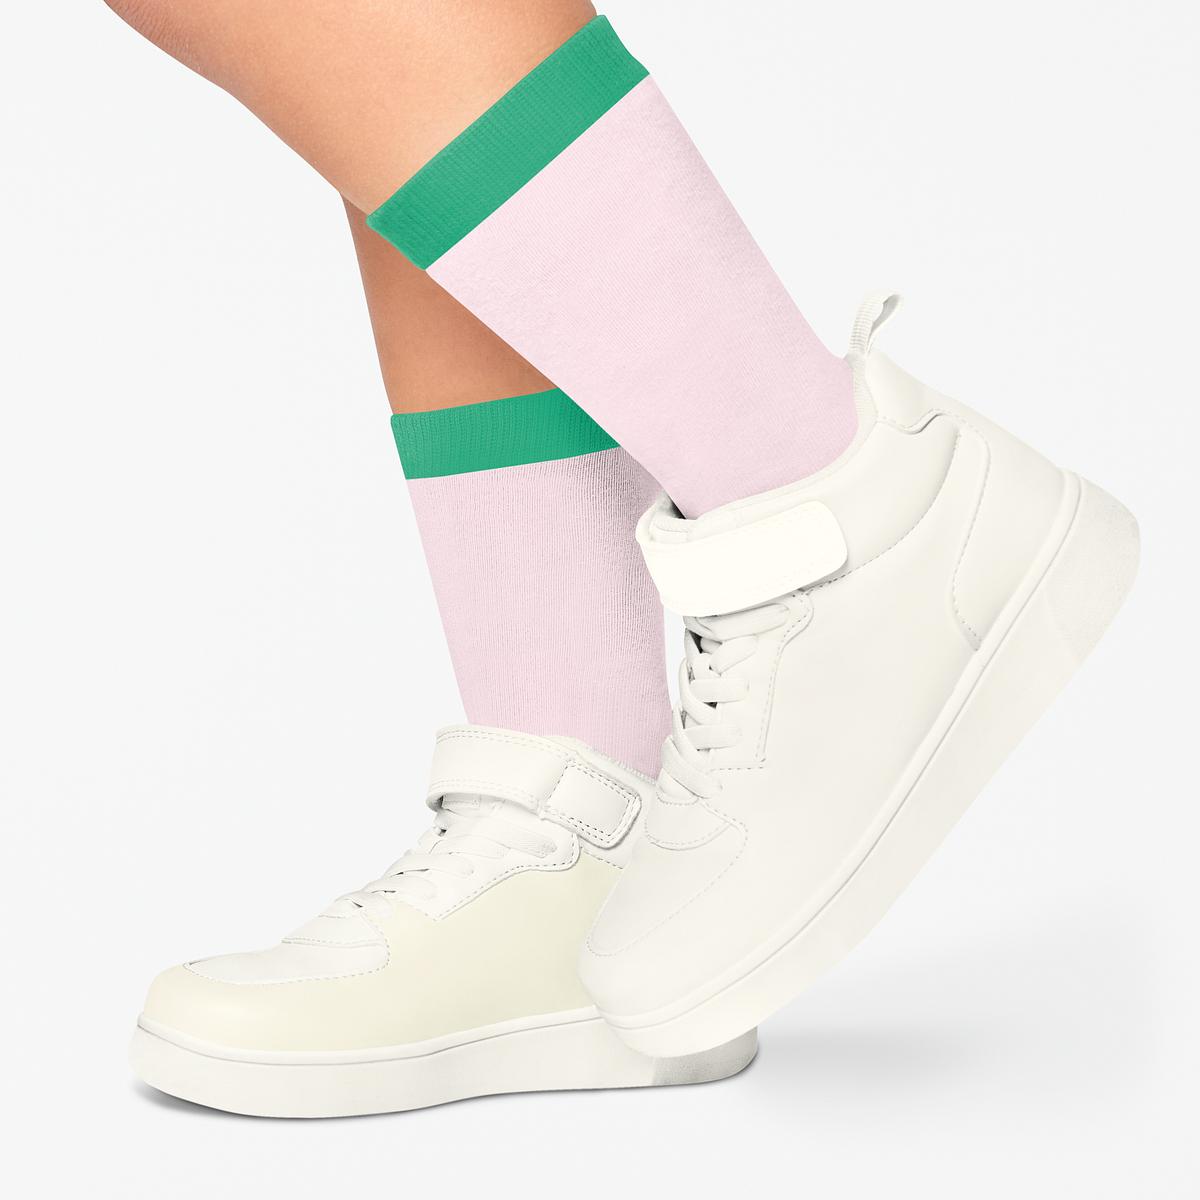 Kid in white sneakers mockup | Free PSD Mockup - rawpixel